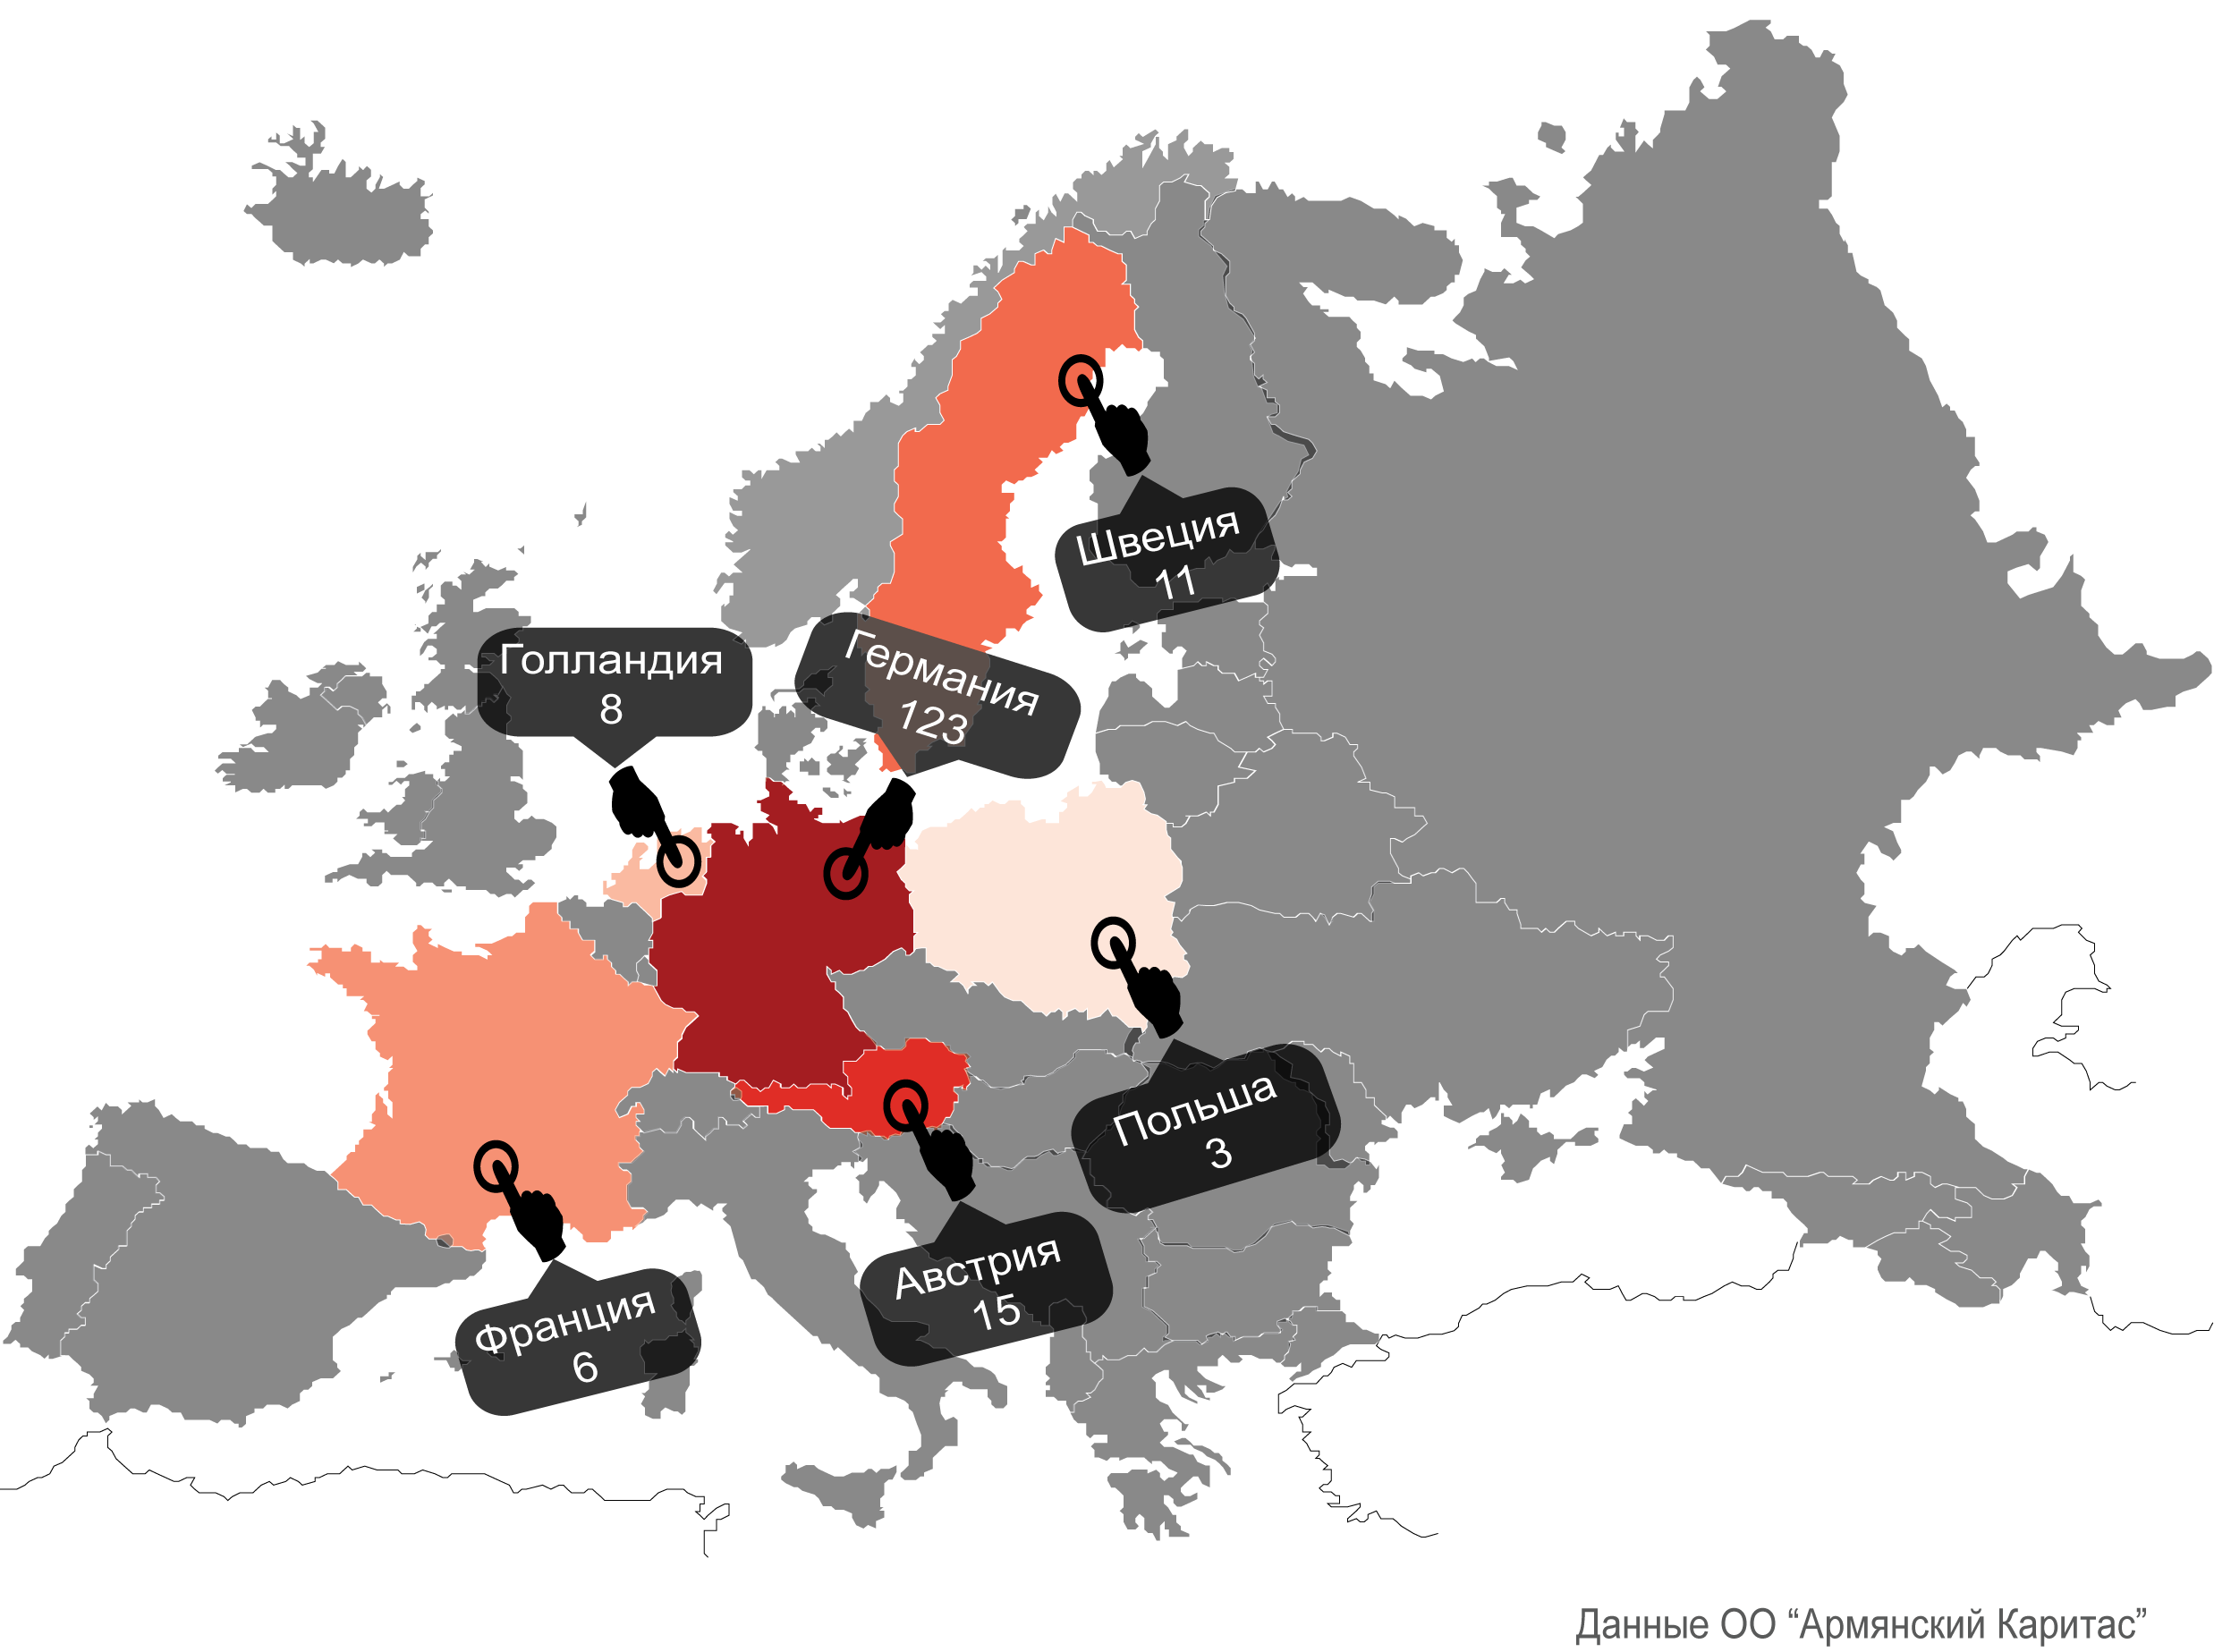 europ_map_rus.png (406 KB)